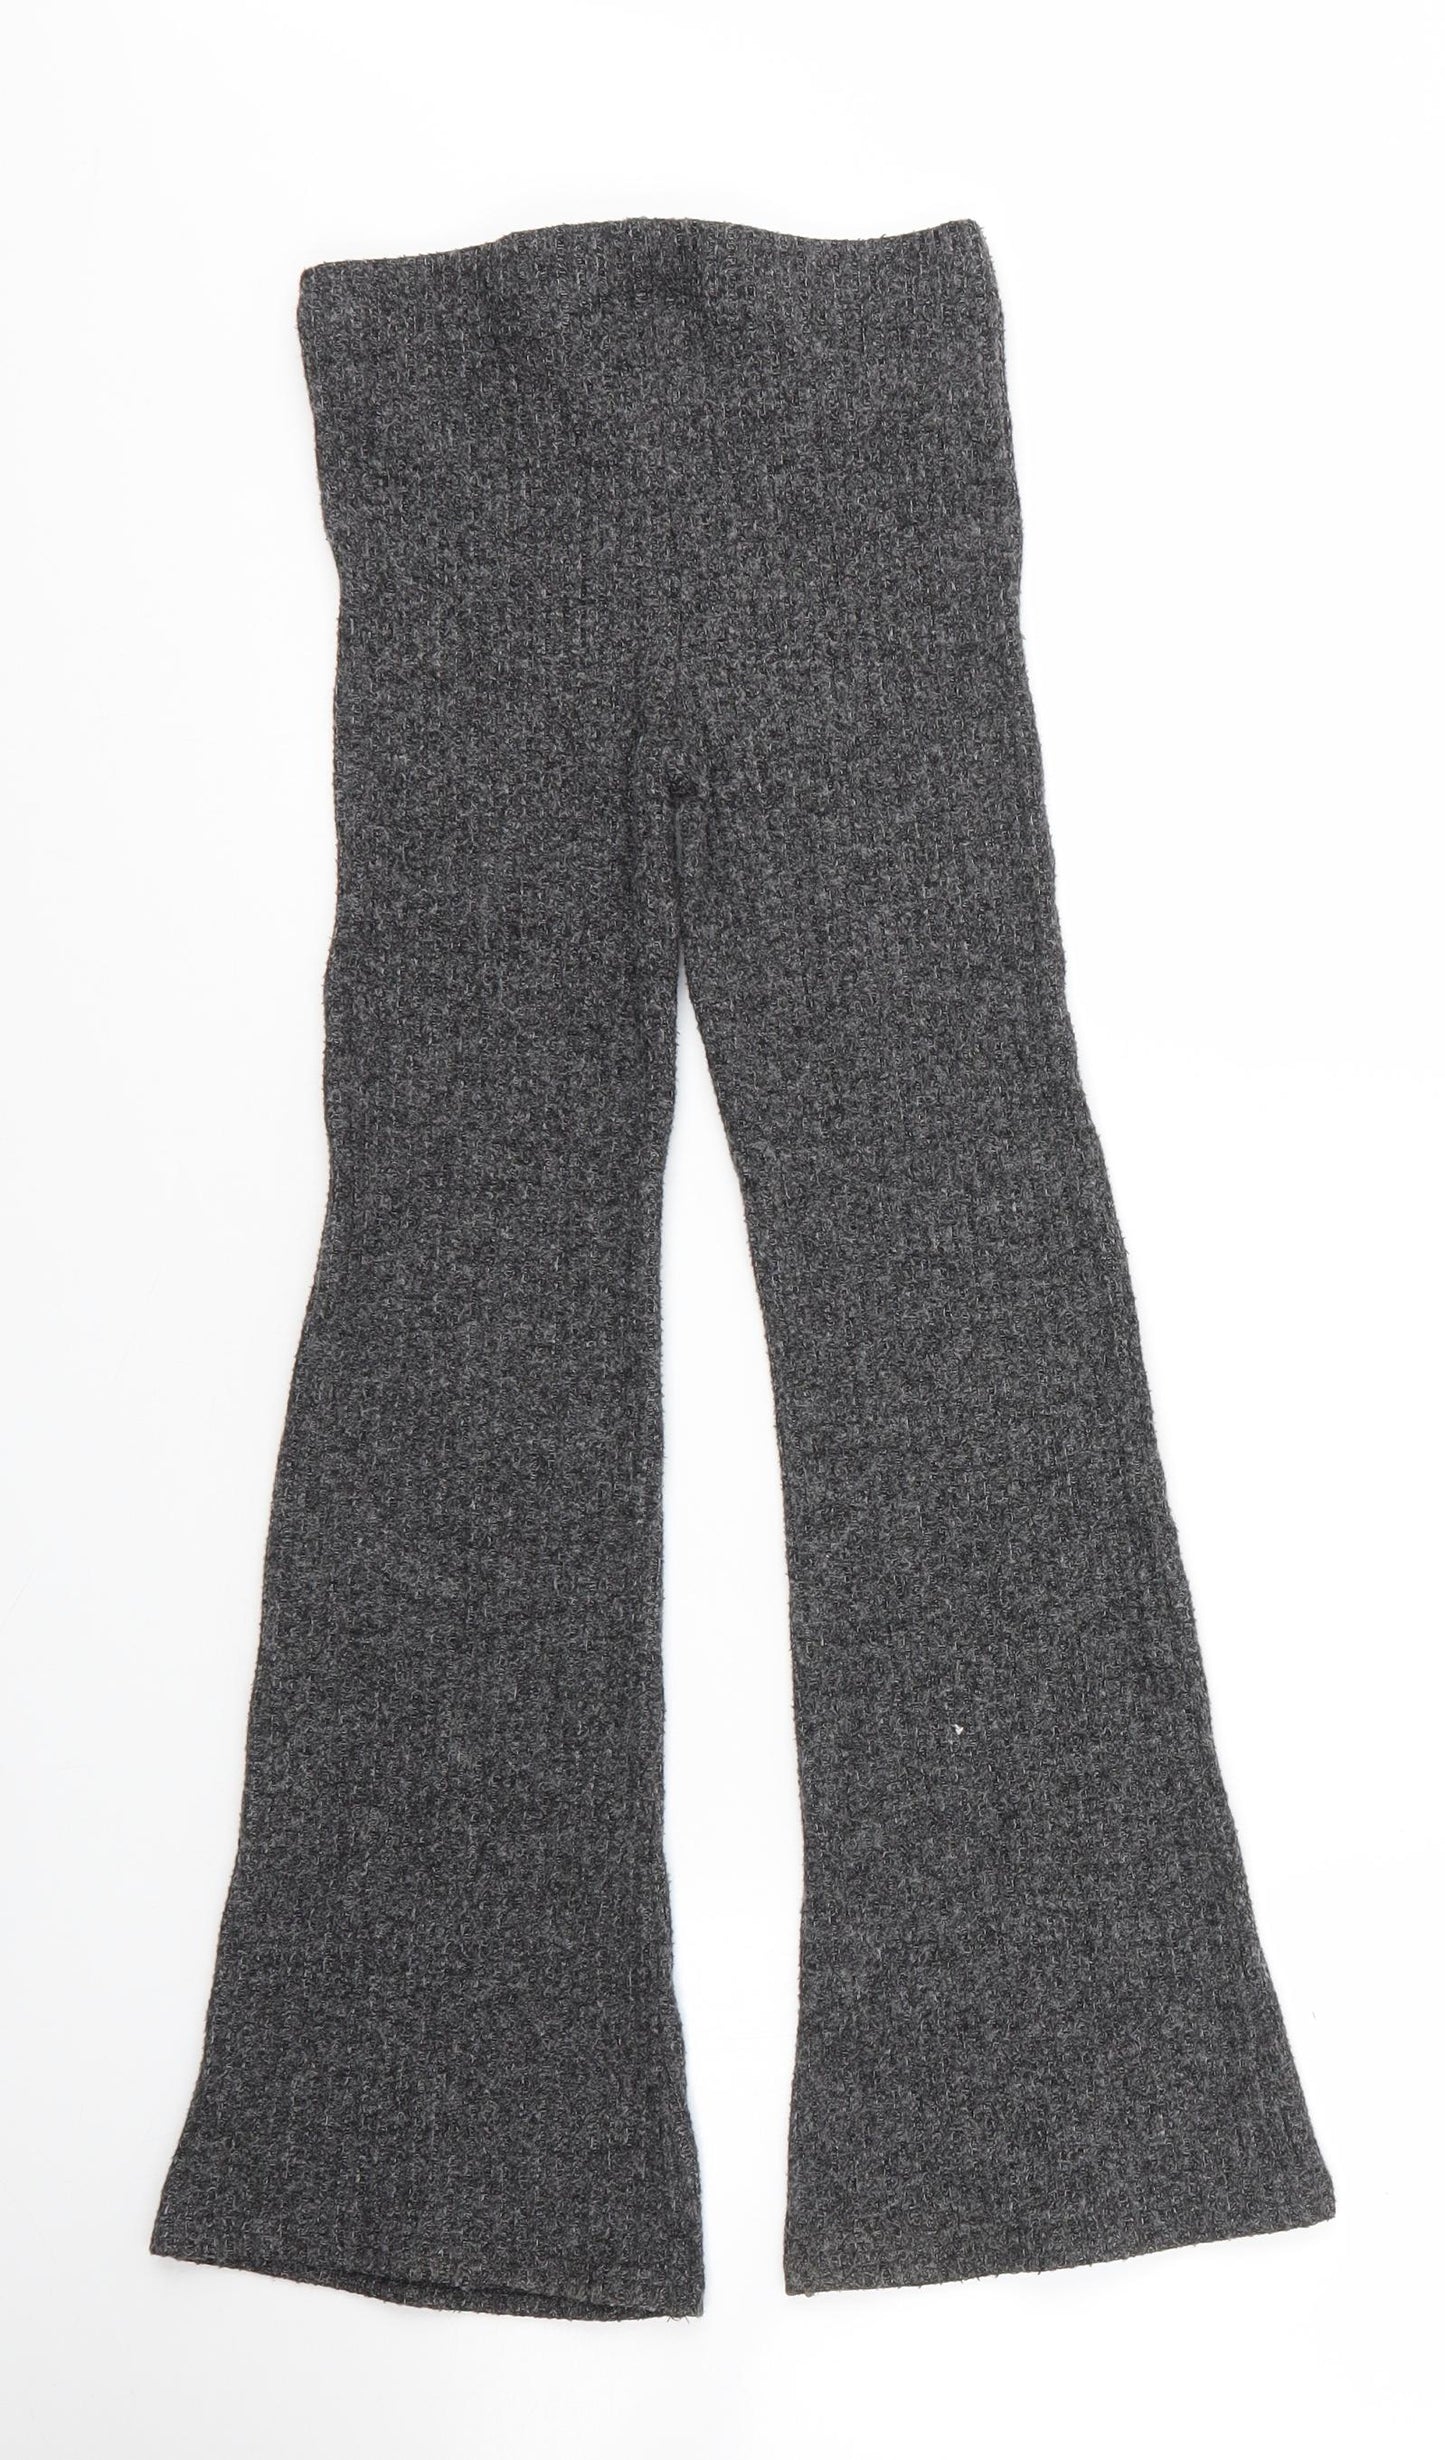 F&F Girls Grey  Viscose Sweatpants Trousers Size 9 Months L24 in Regular Drawstring